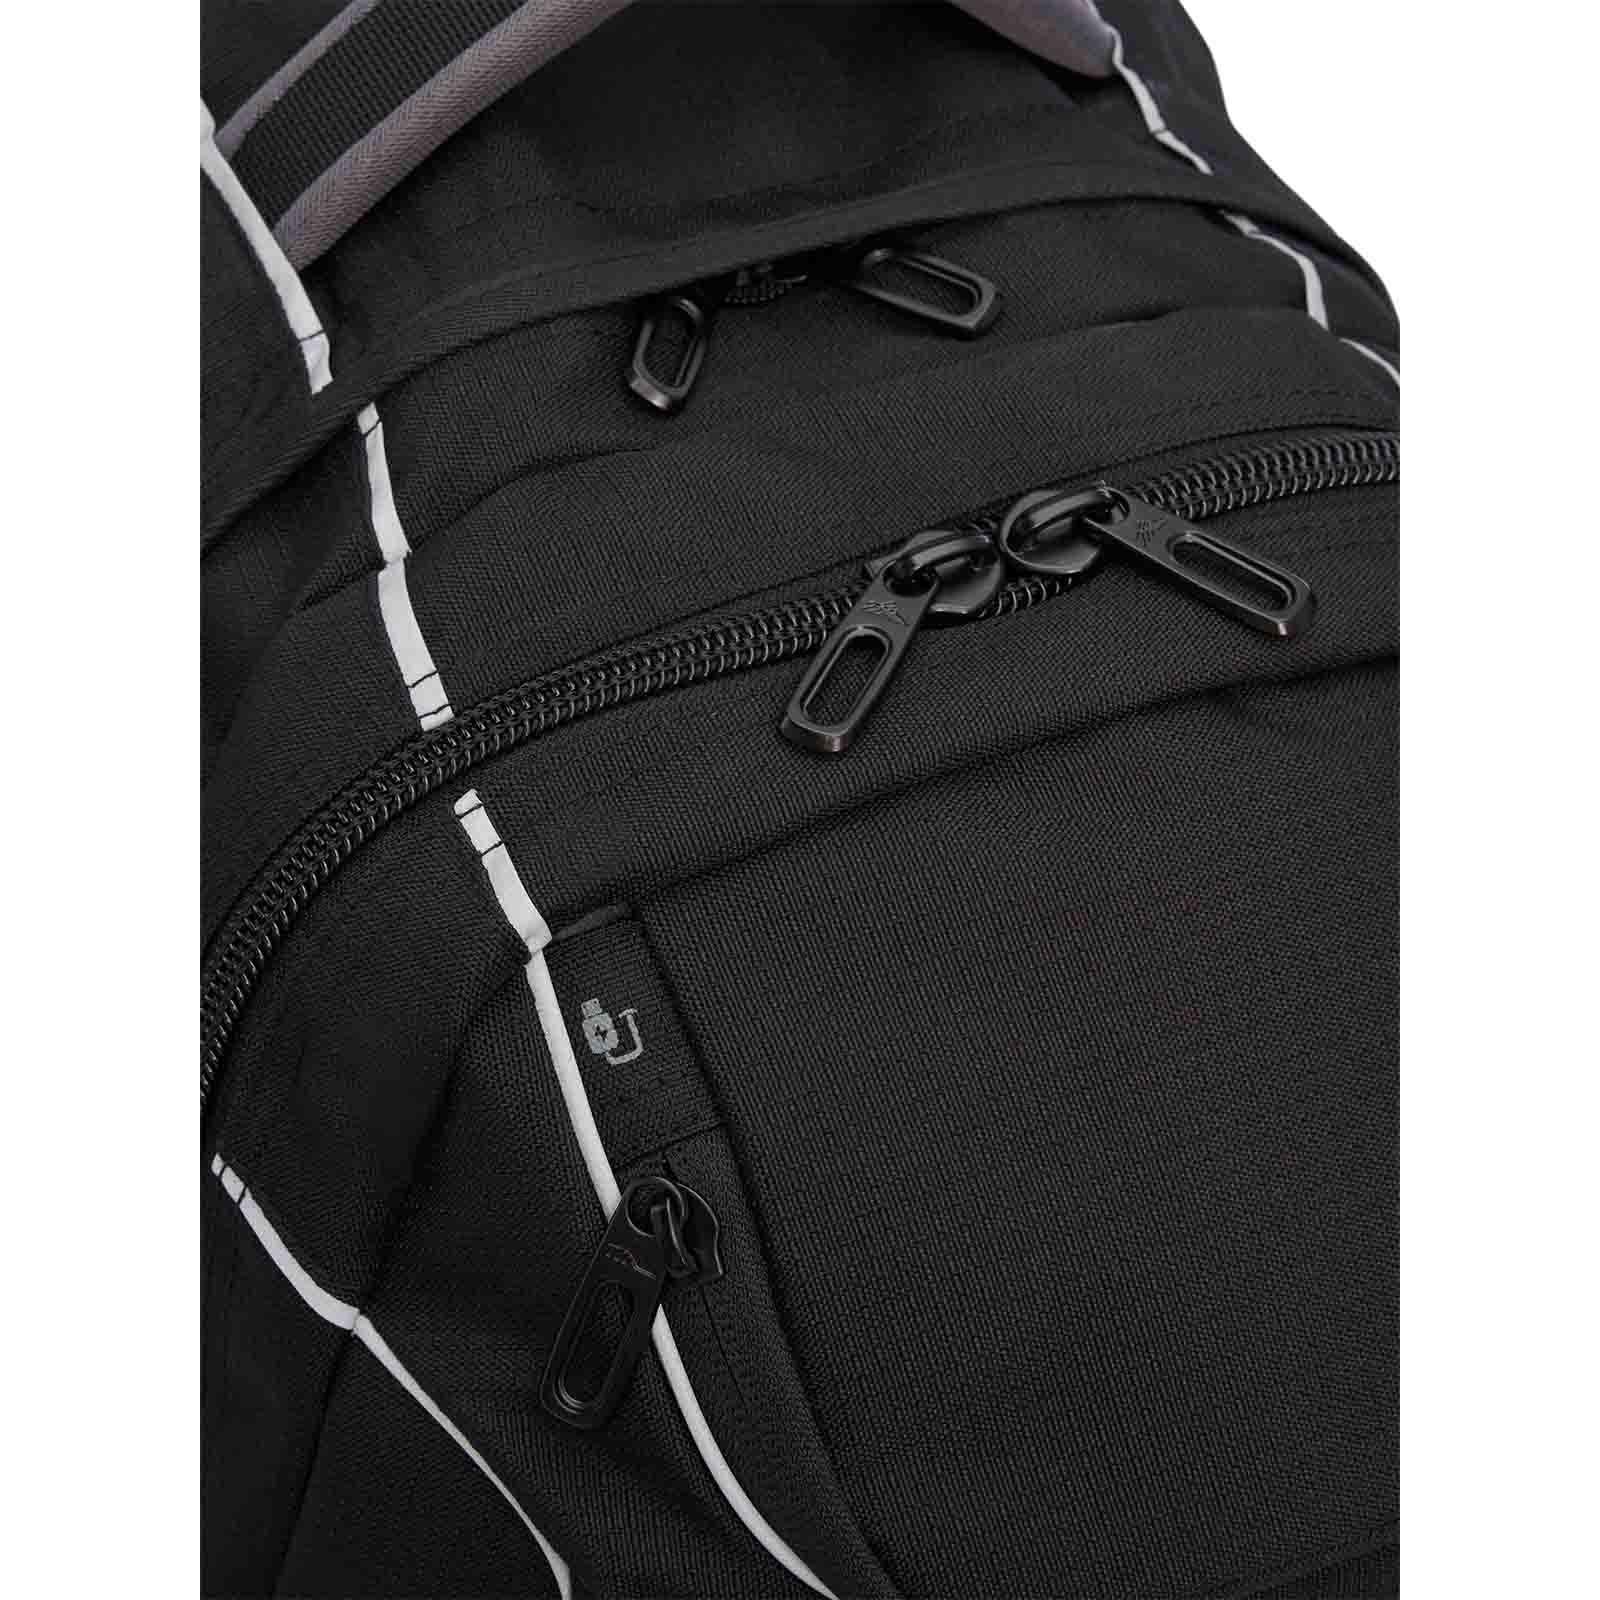 High-Sierra-Access-3-Eco-16-Inch-Laptop-Backpack-Black-Zips